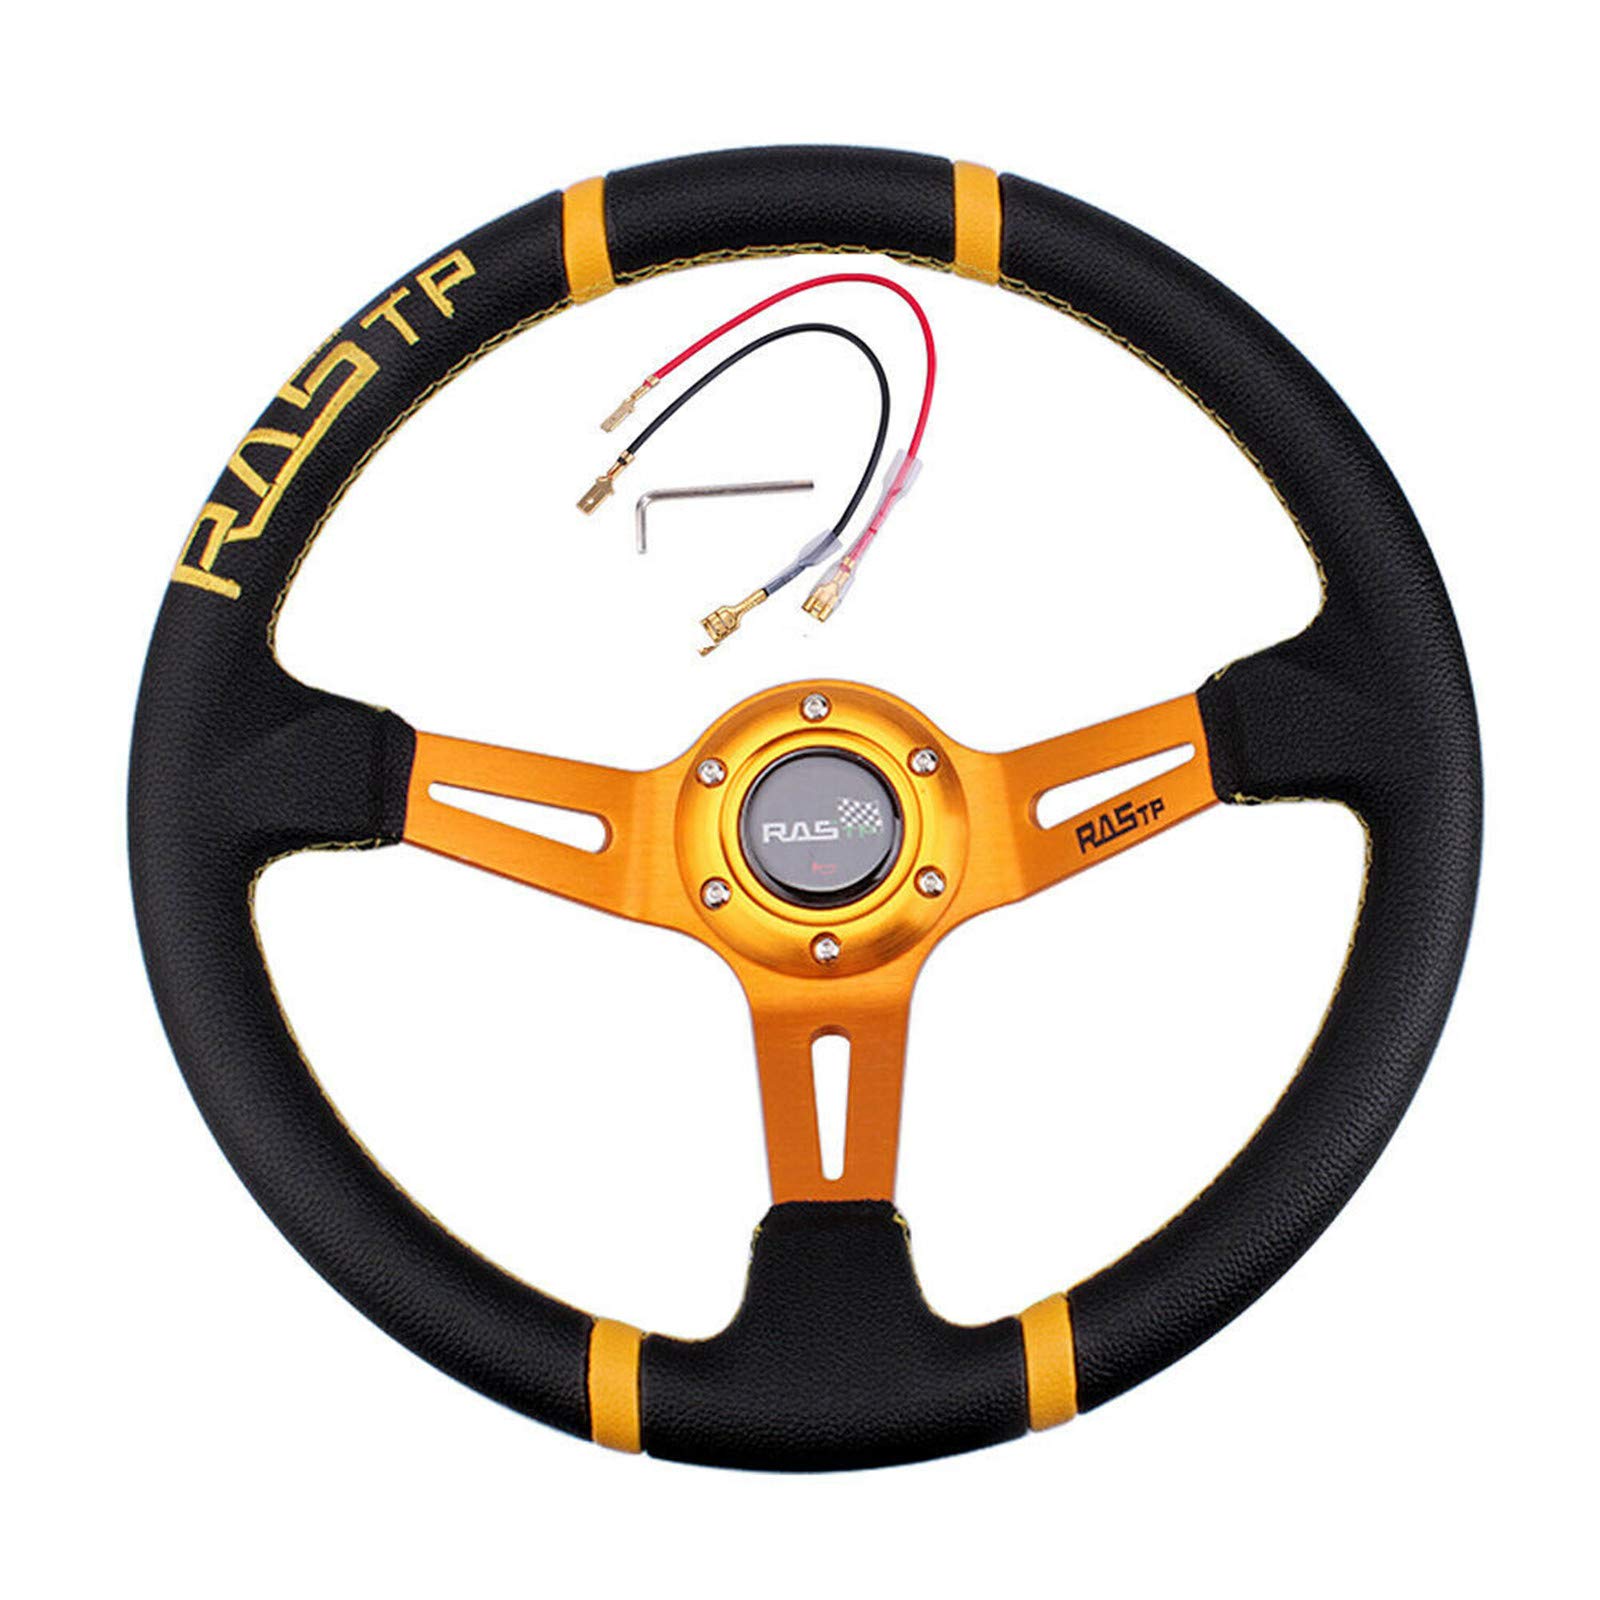 Universal Car Steering Wheel, Sport Steering Wheel Leather Steering Wheel Covers, Breathable Non-Slip, Auto JDM Personality Modified Racing Steering Wheel, 14 Inch 35CM Gold von Zhuodingsen